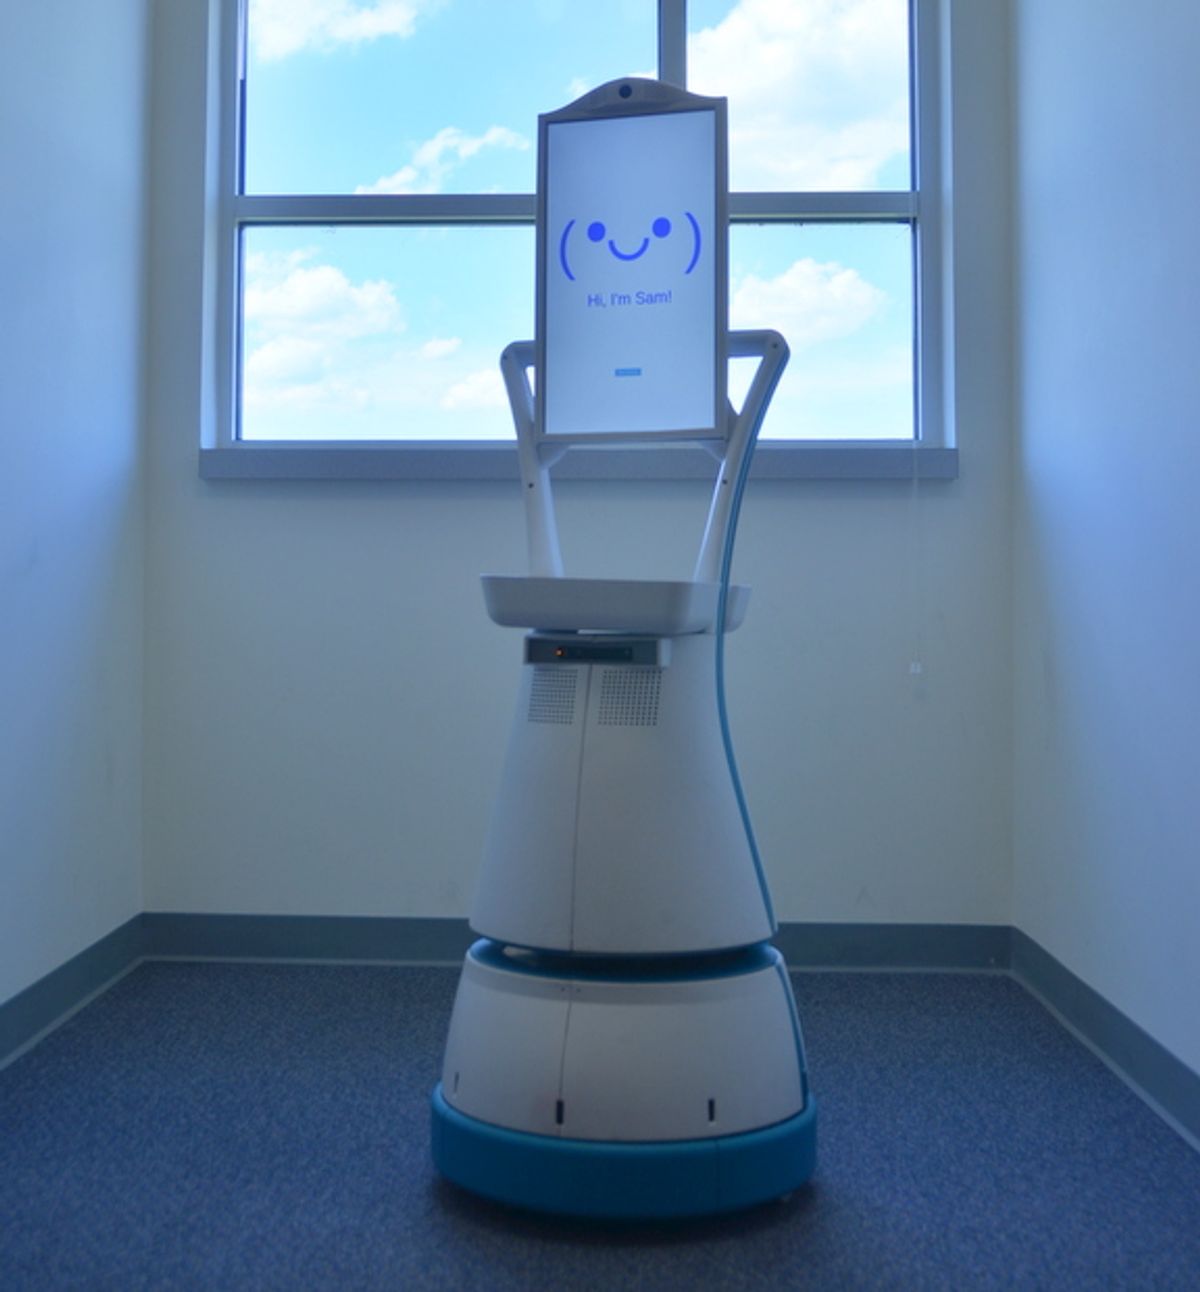 Luvozo's SAM robot is designed to assist staff at senior living facilities